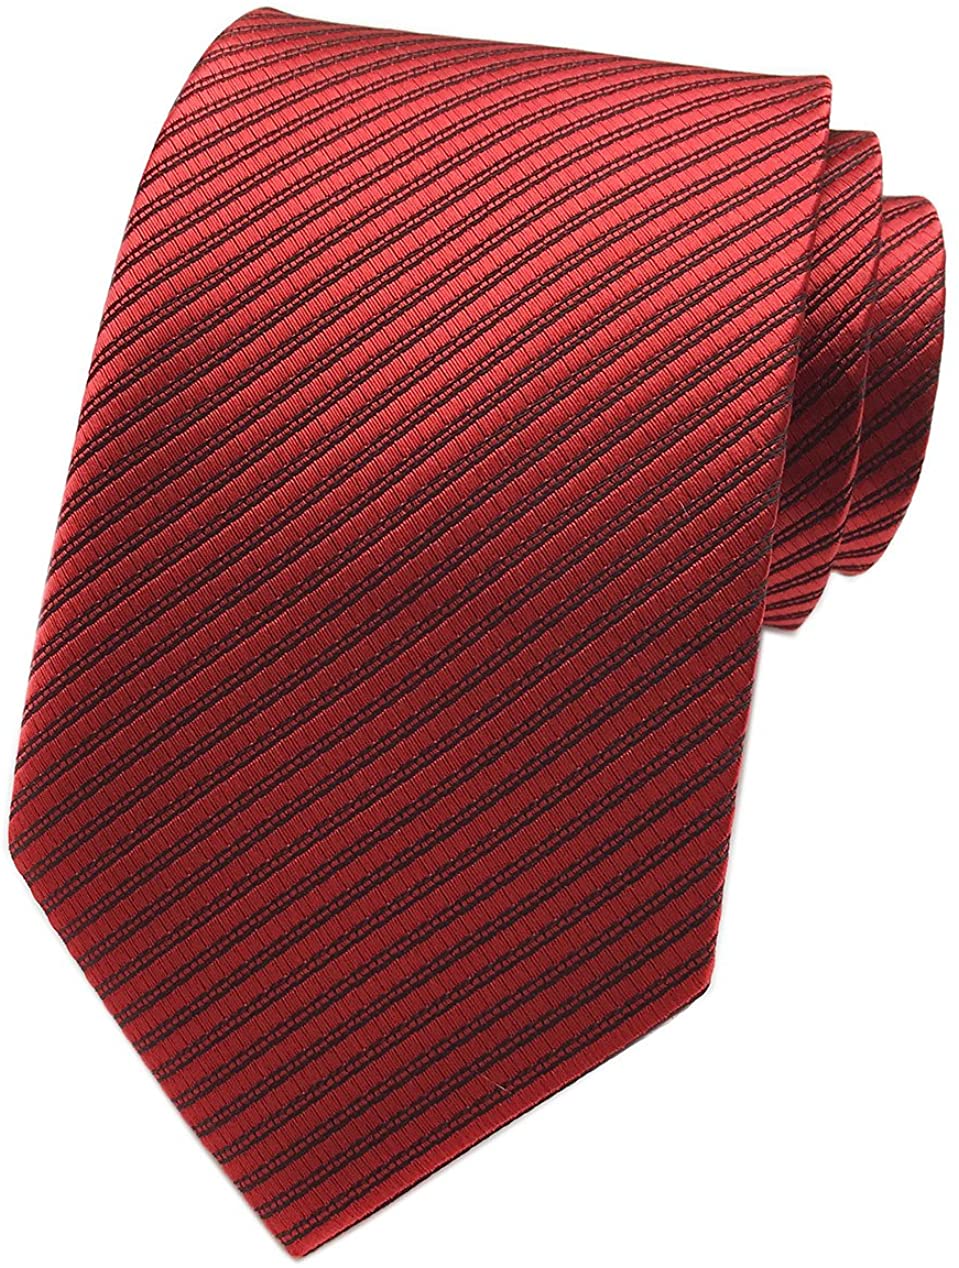 Details about   Elfeves Men's Solid Color Ties Fine Stripe Smooth Graduation Formal Suit Necktie 